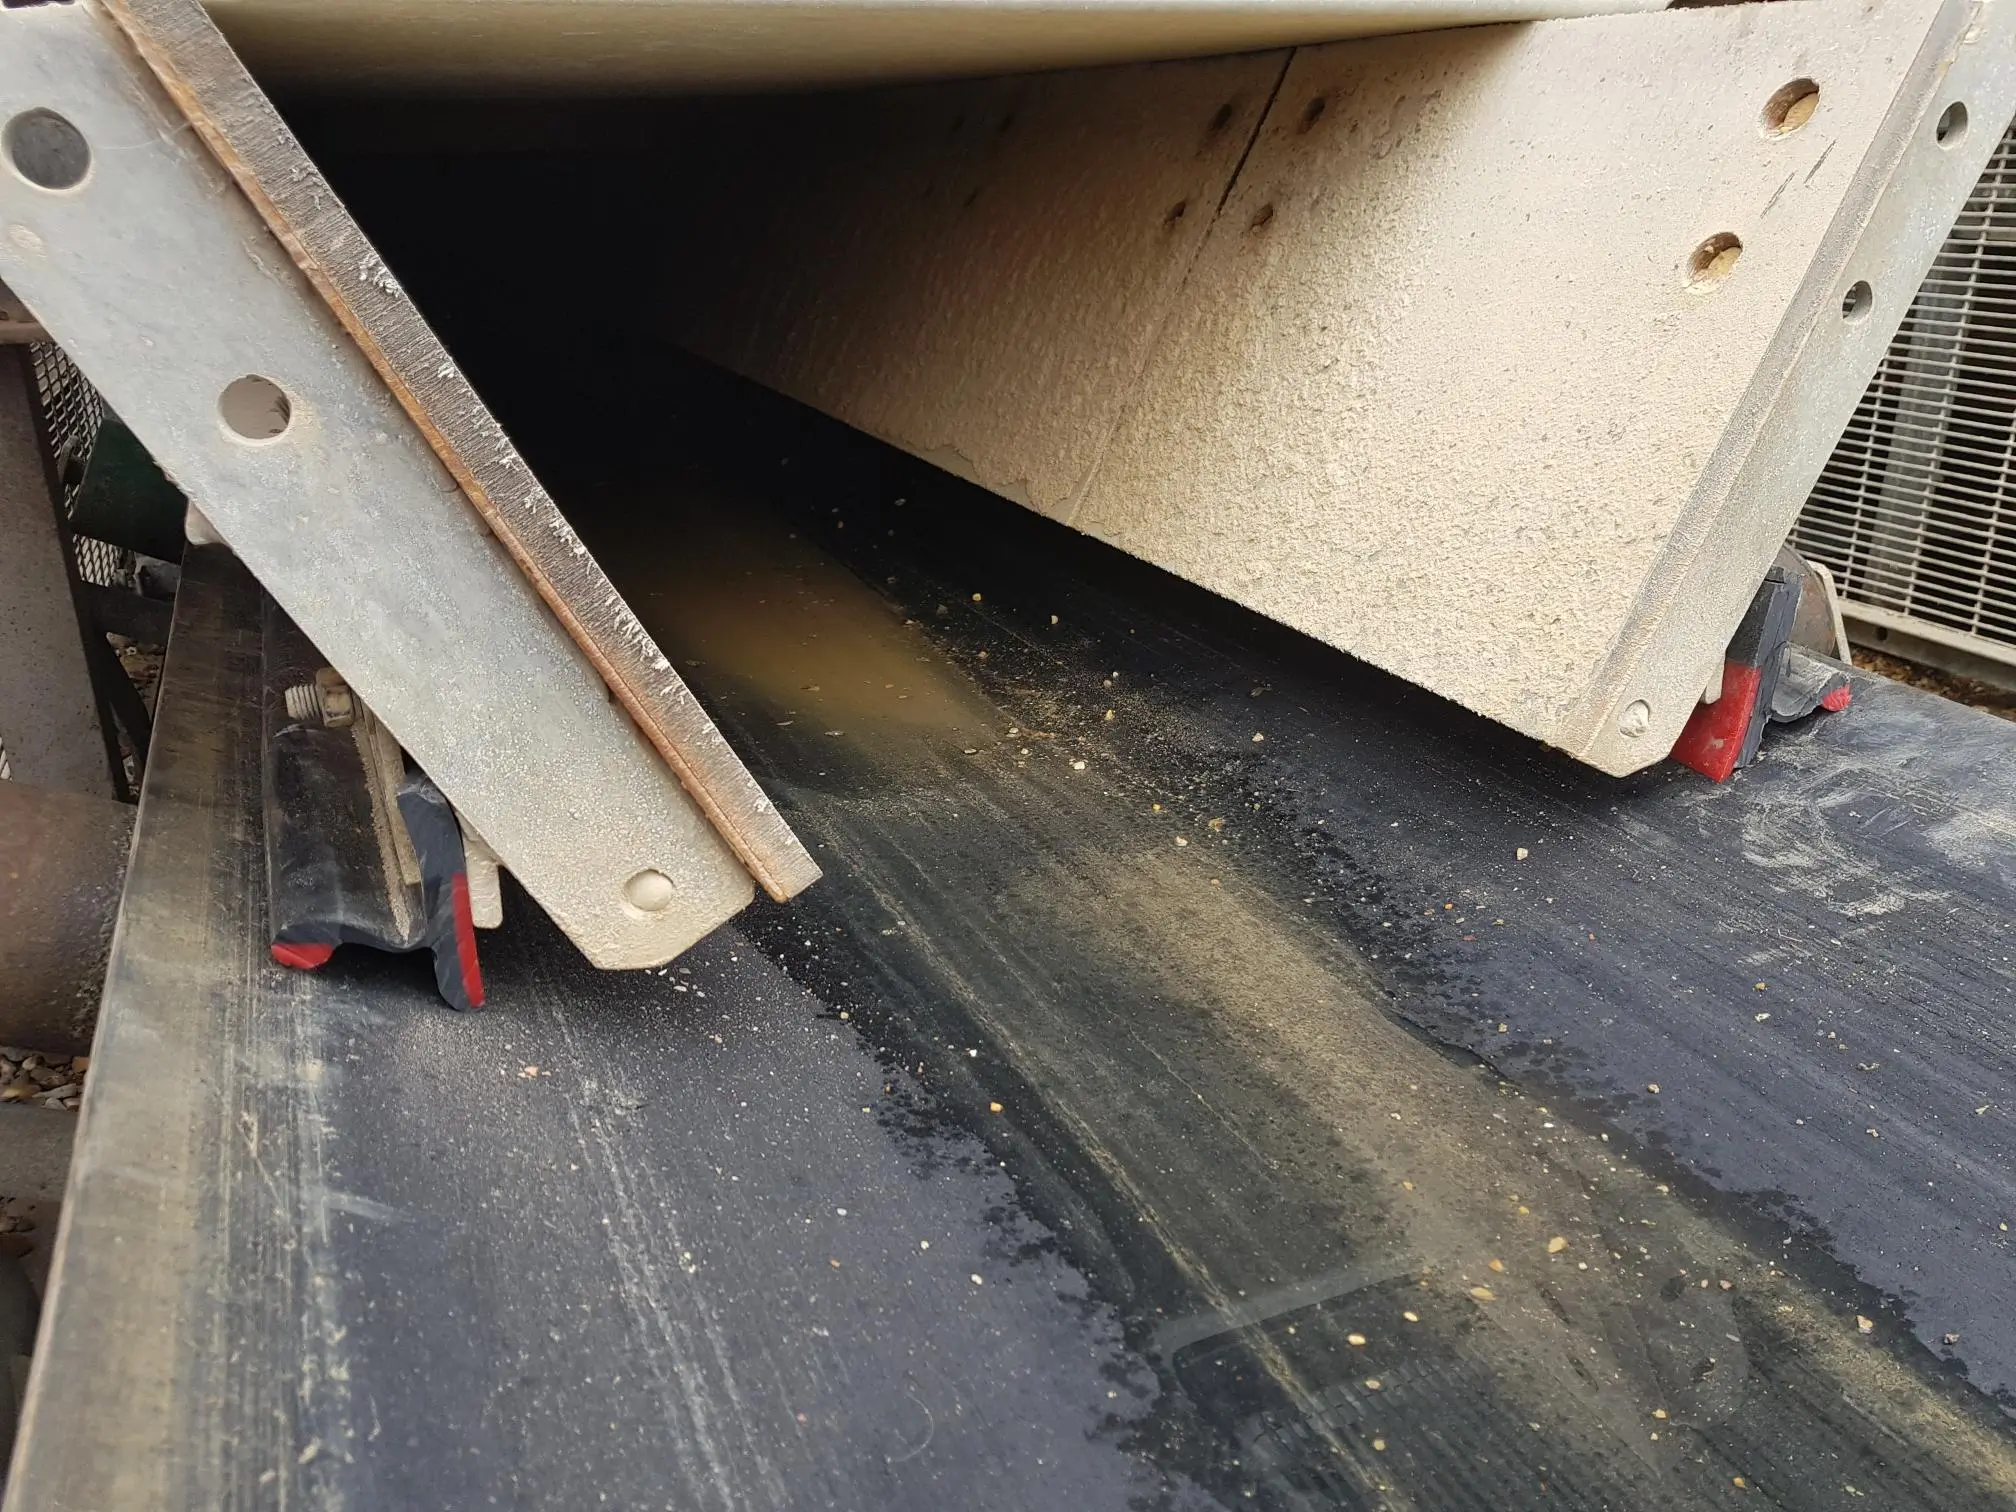 conveyor belt skirting